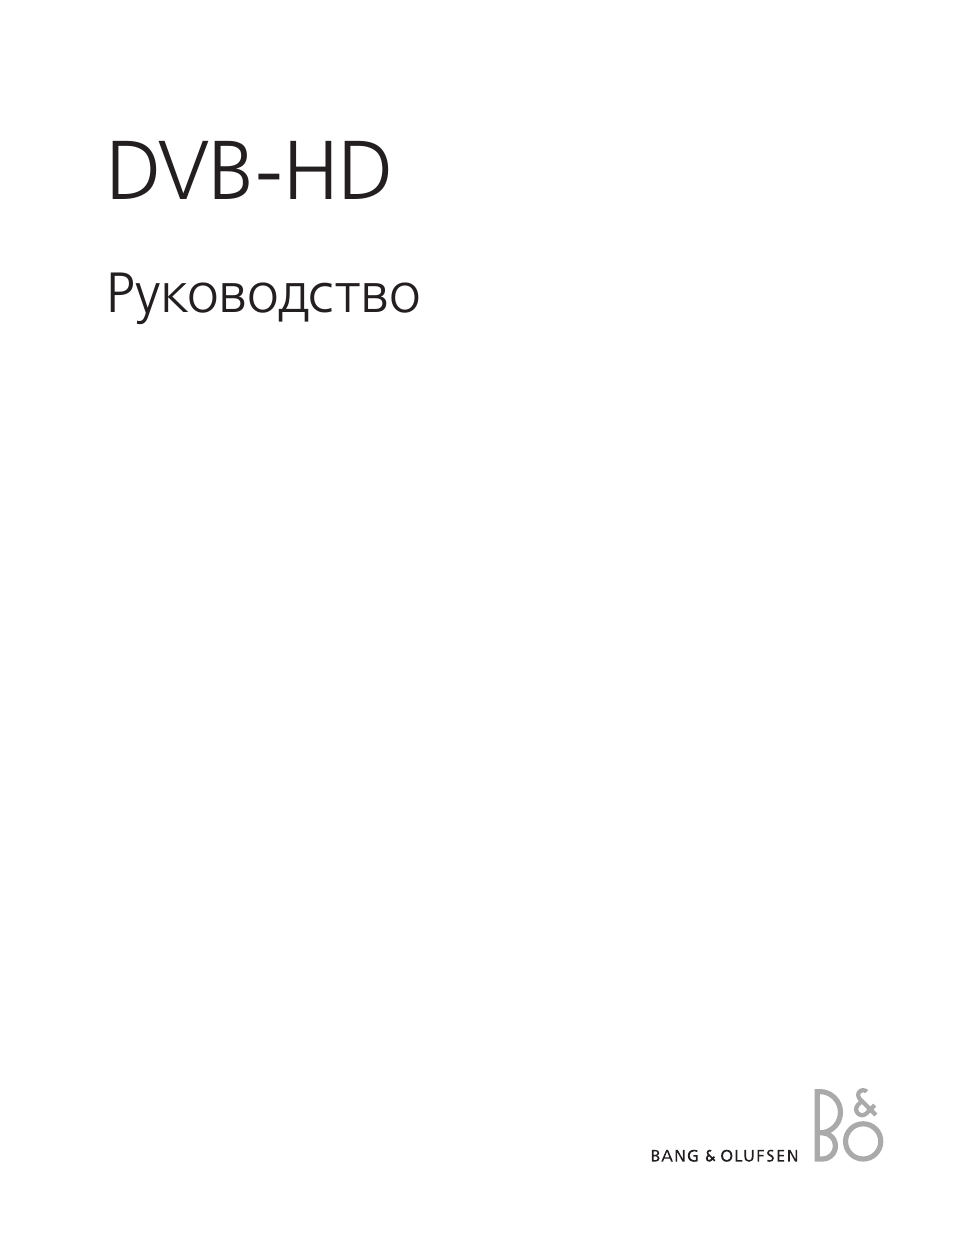 Инструкция по эксплуатации Bang & Olufsen DVB-HD - User Guide | 23 страницы